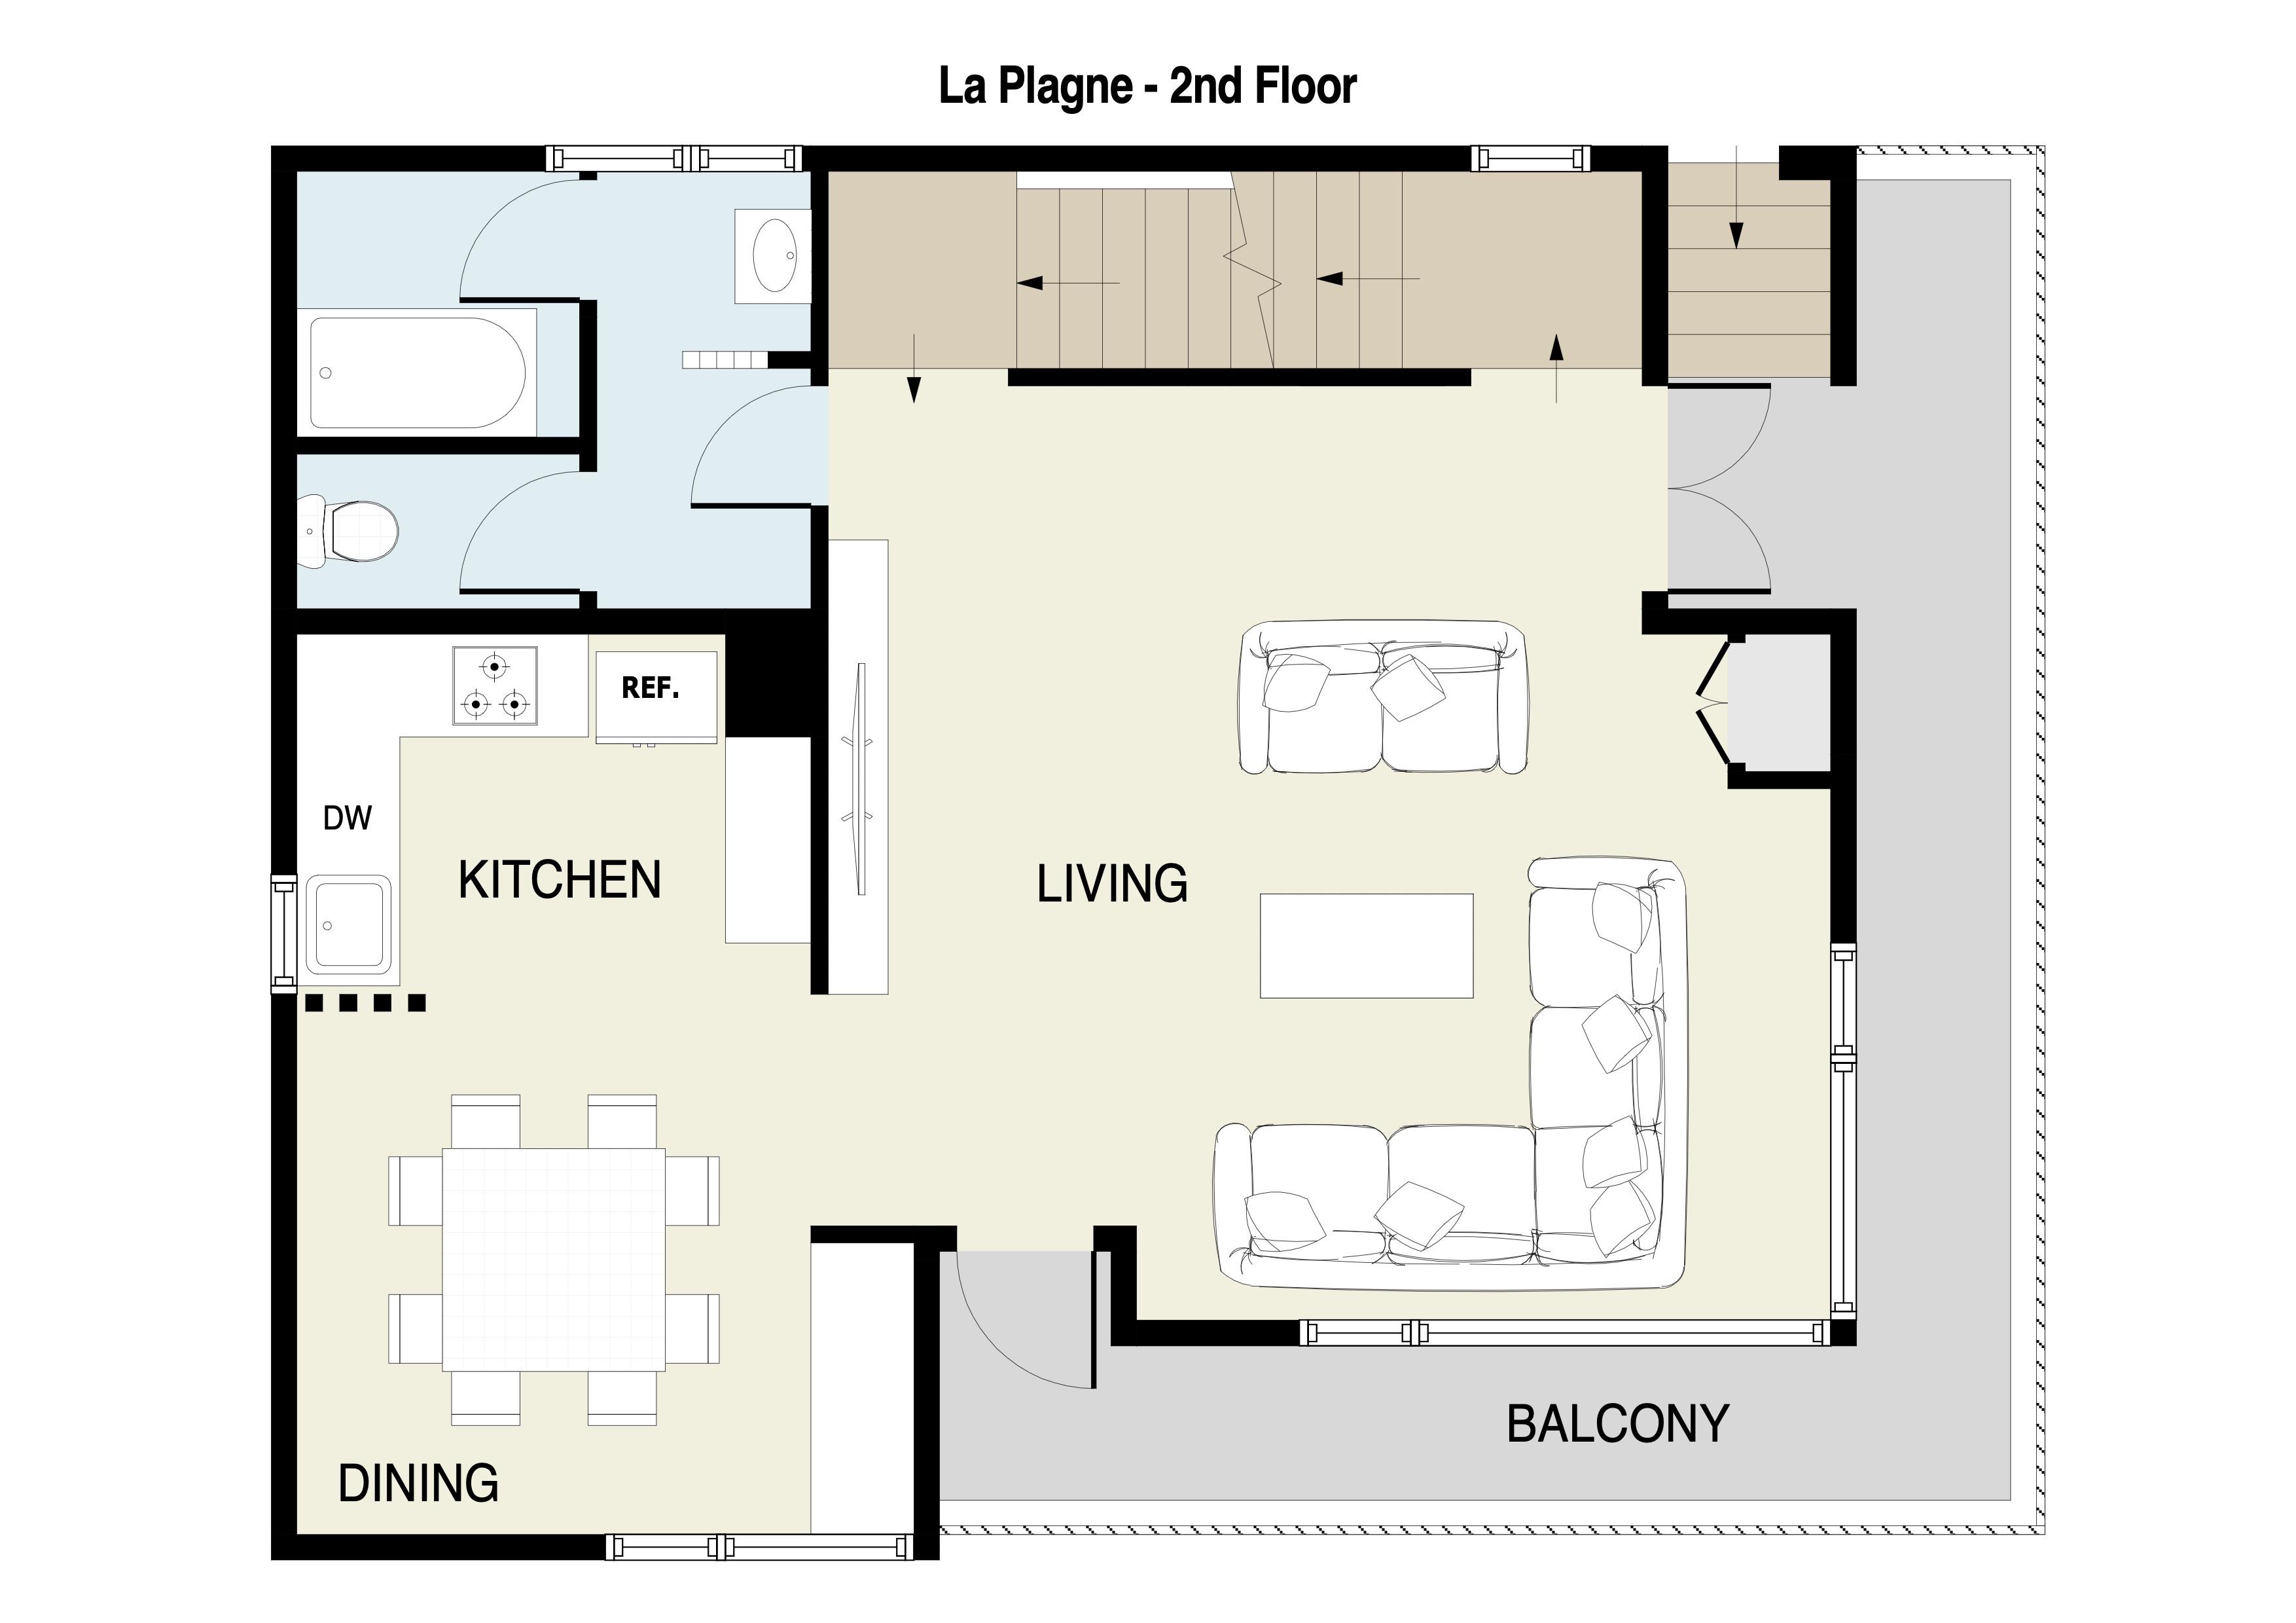 La Plagne 2nd Floor Plan